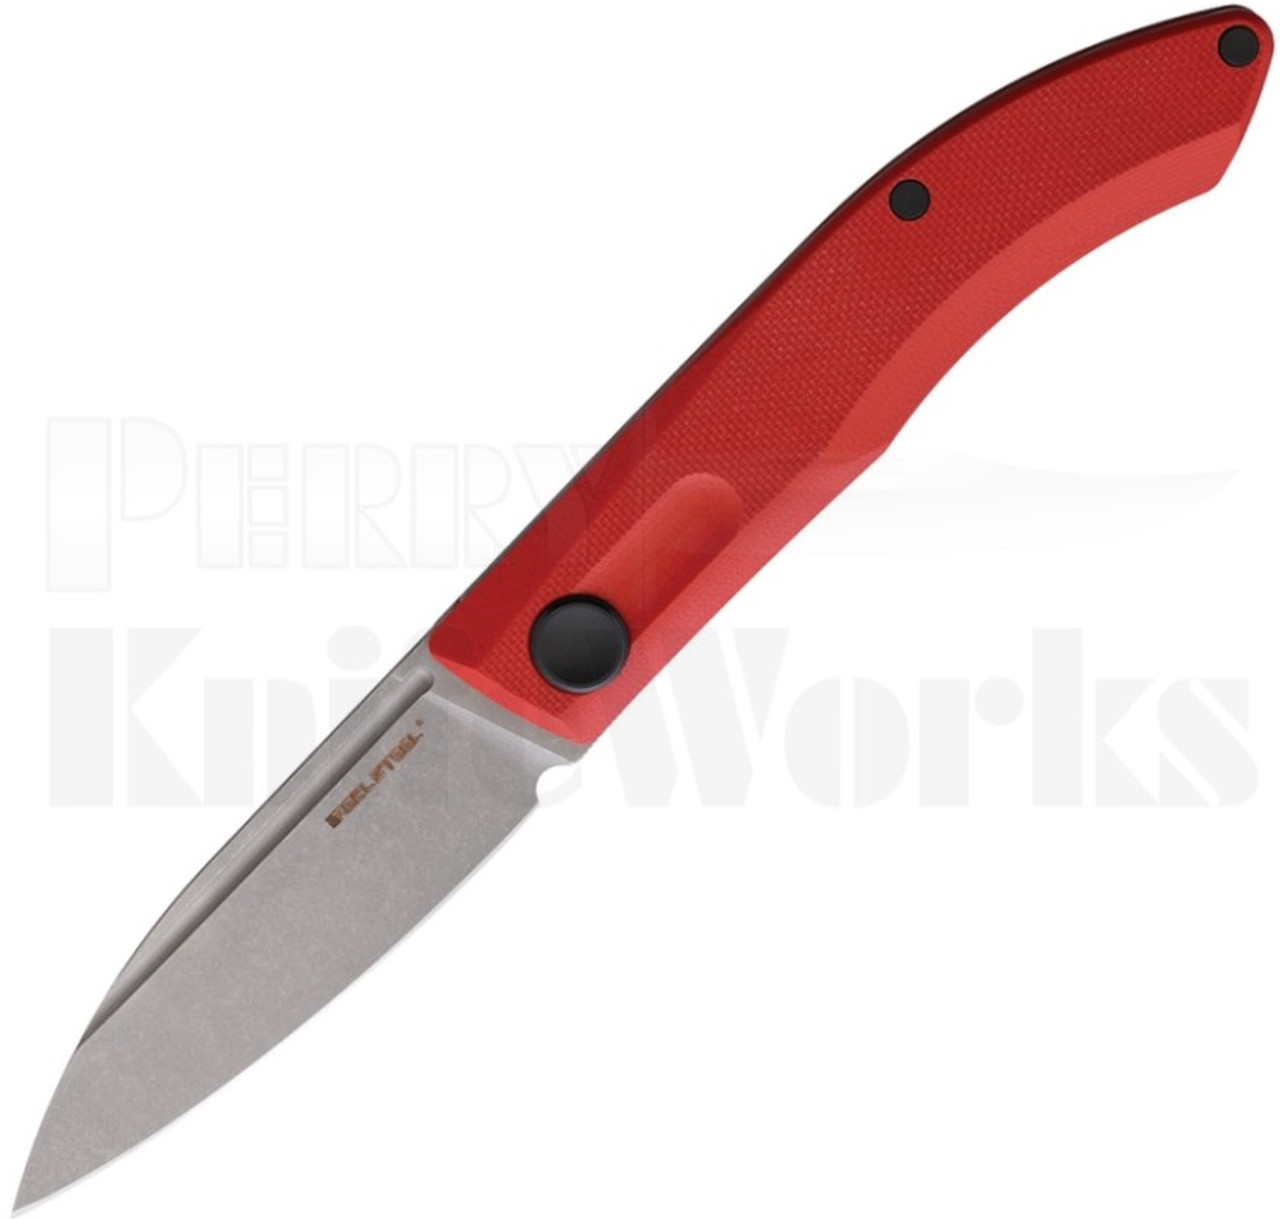 Real Steel Stella Slip Joint Knife Red G-10 l 3" Greywash l 7053 l For Sale